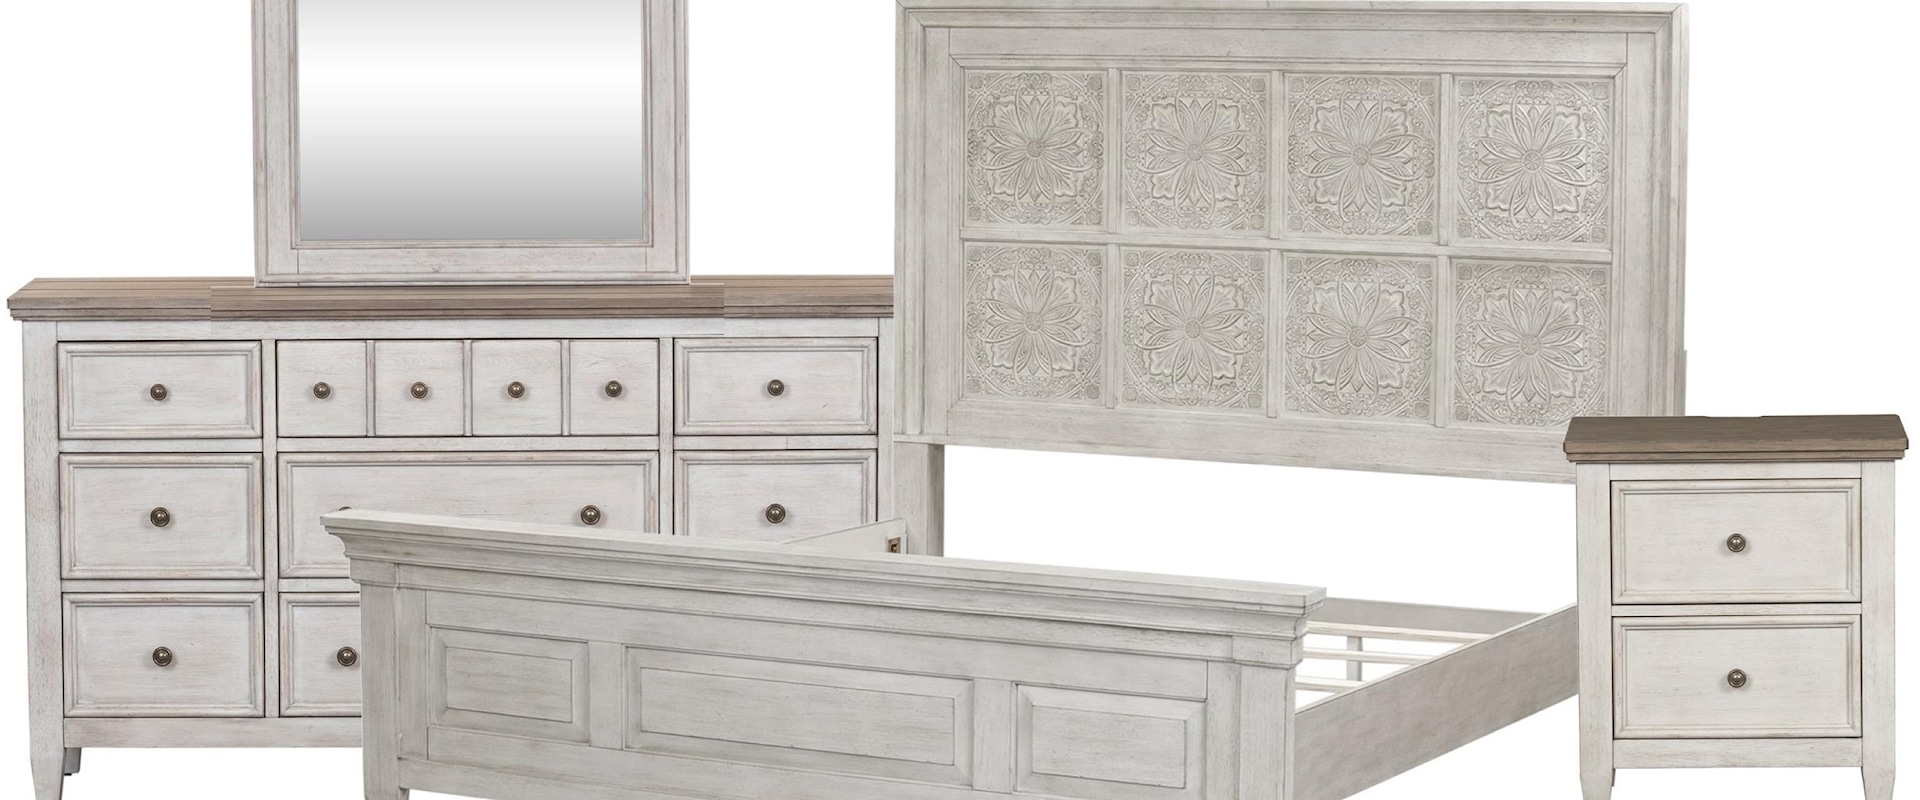 King Decorative Panel Bed, 9 Drawer Dresser, Landscape Mirror, 2 Drawer Nightstand